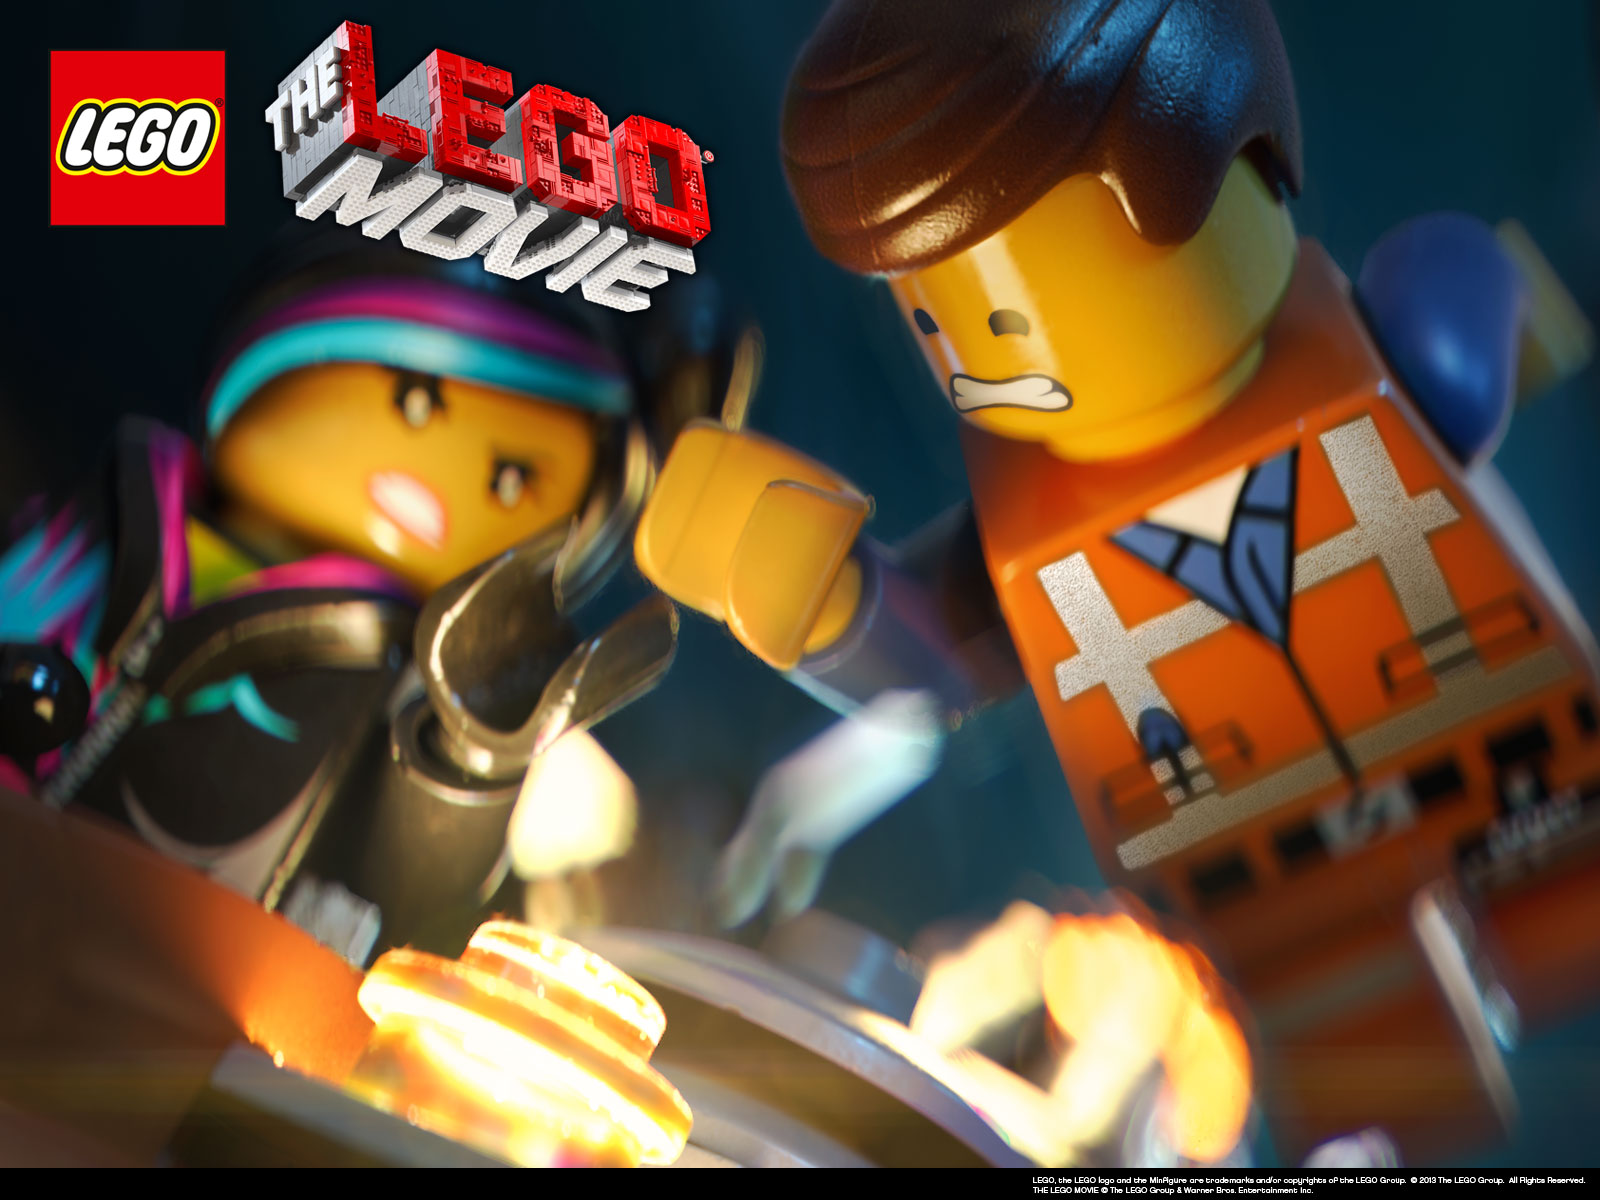 The Lego movie